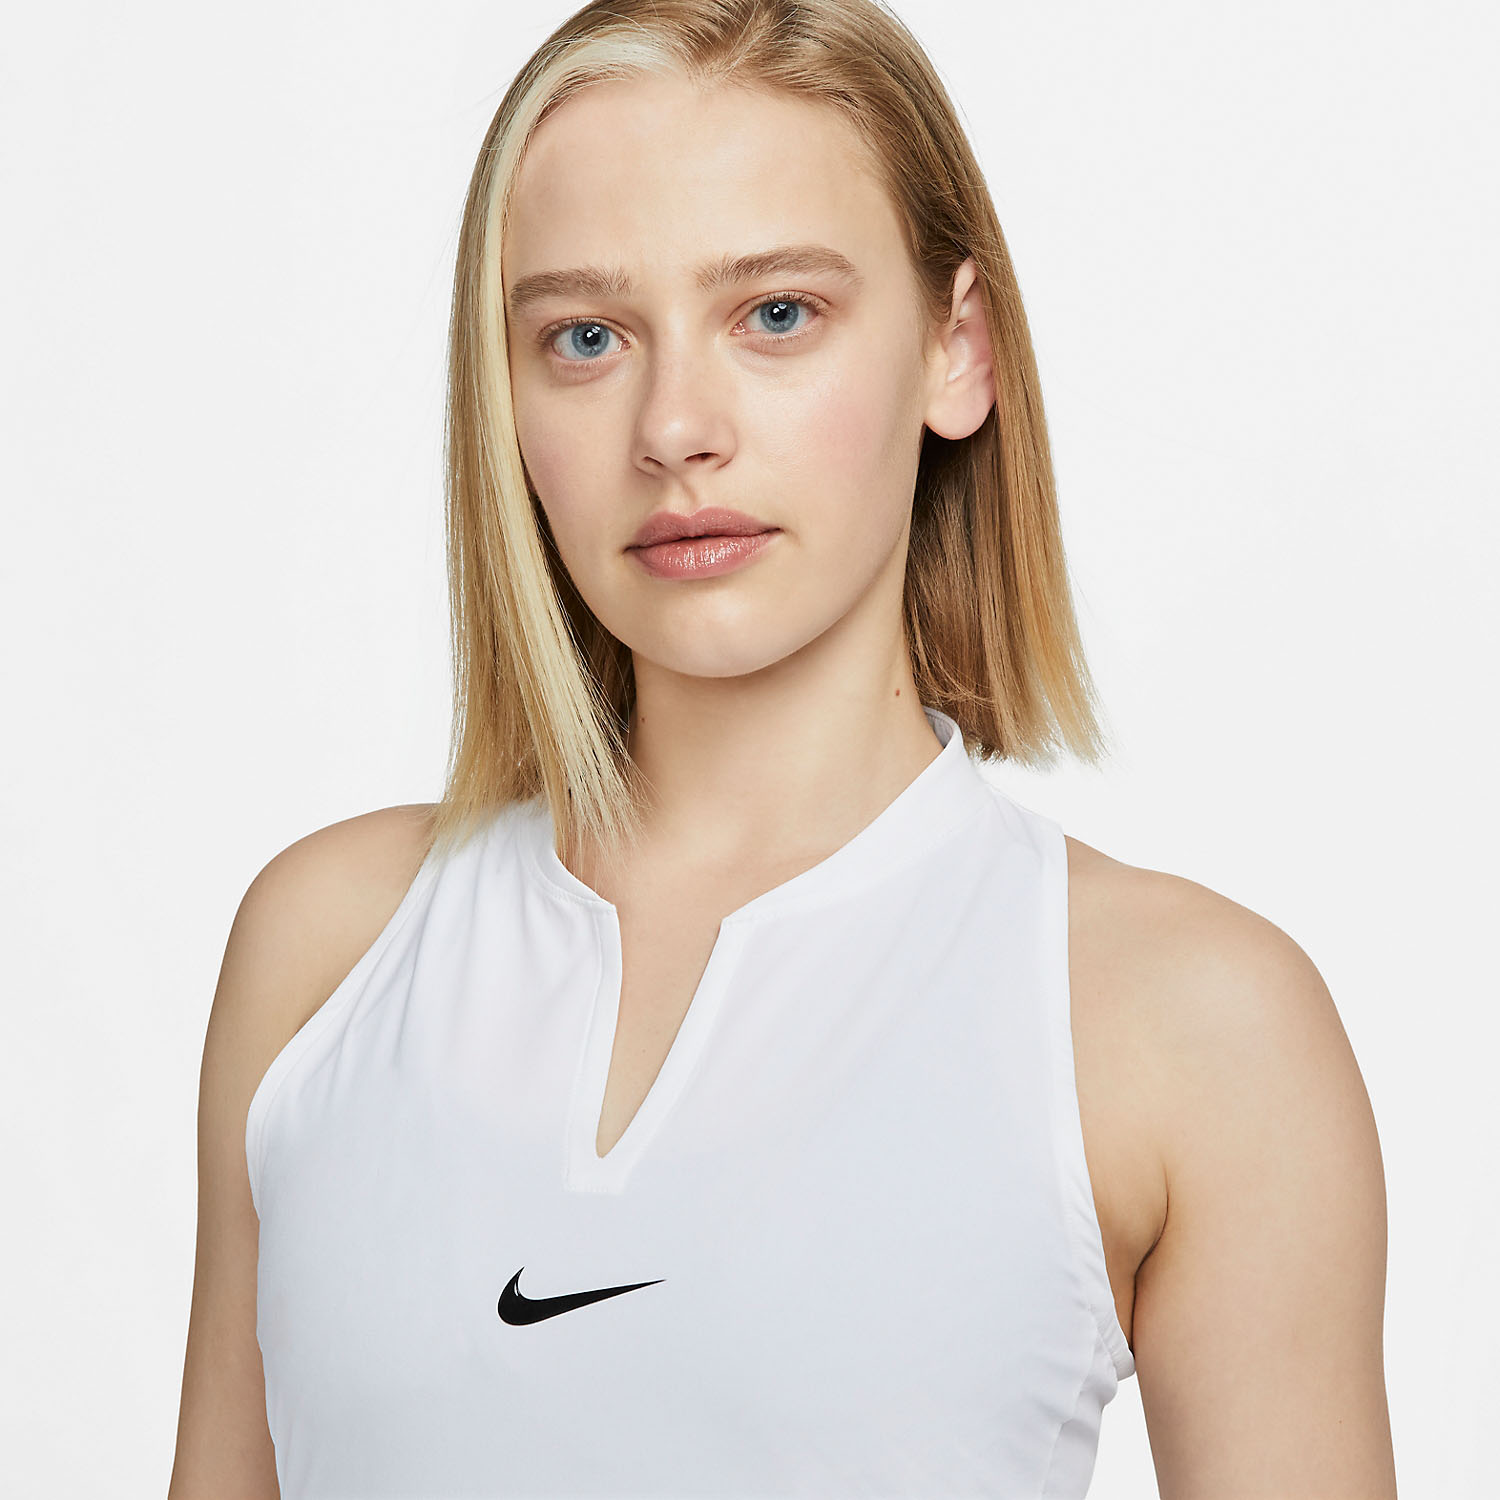 Nike Court Dri-FIT Club Dress - White/Black